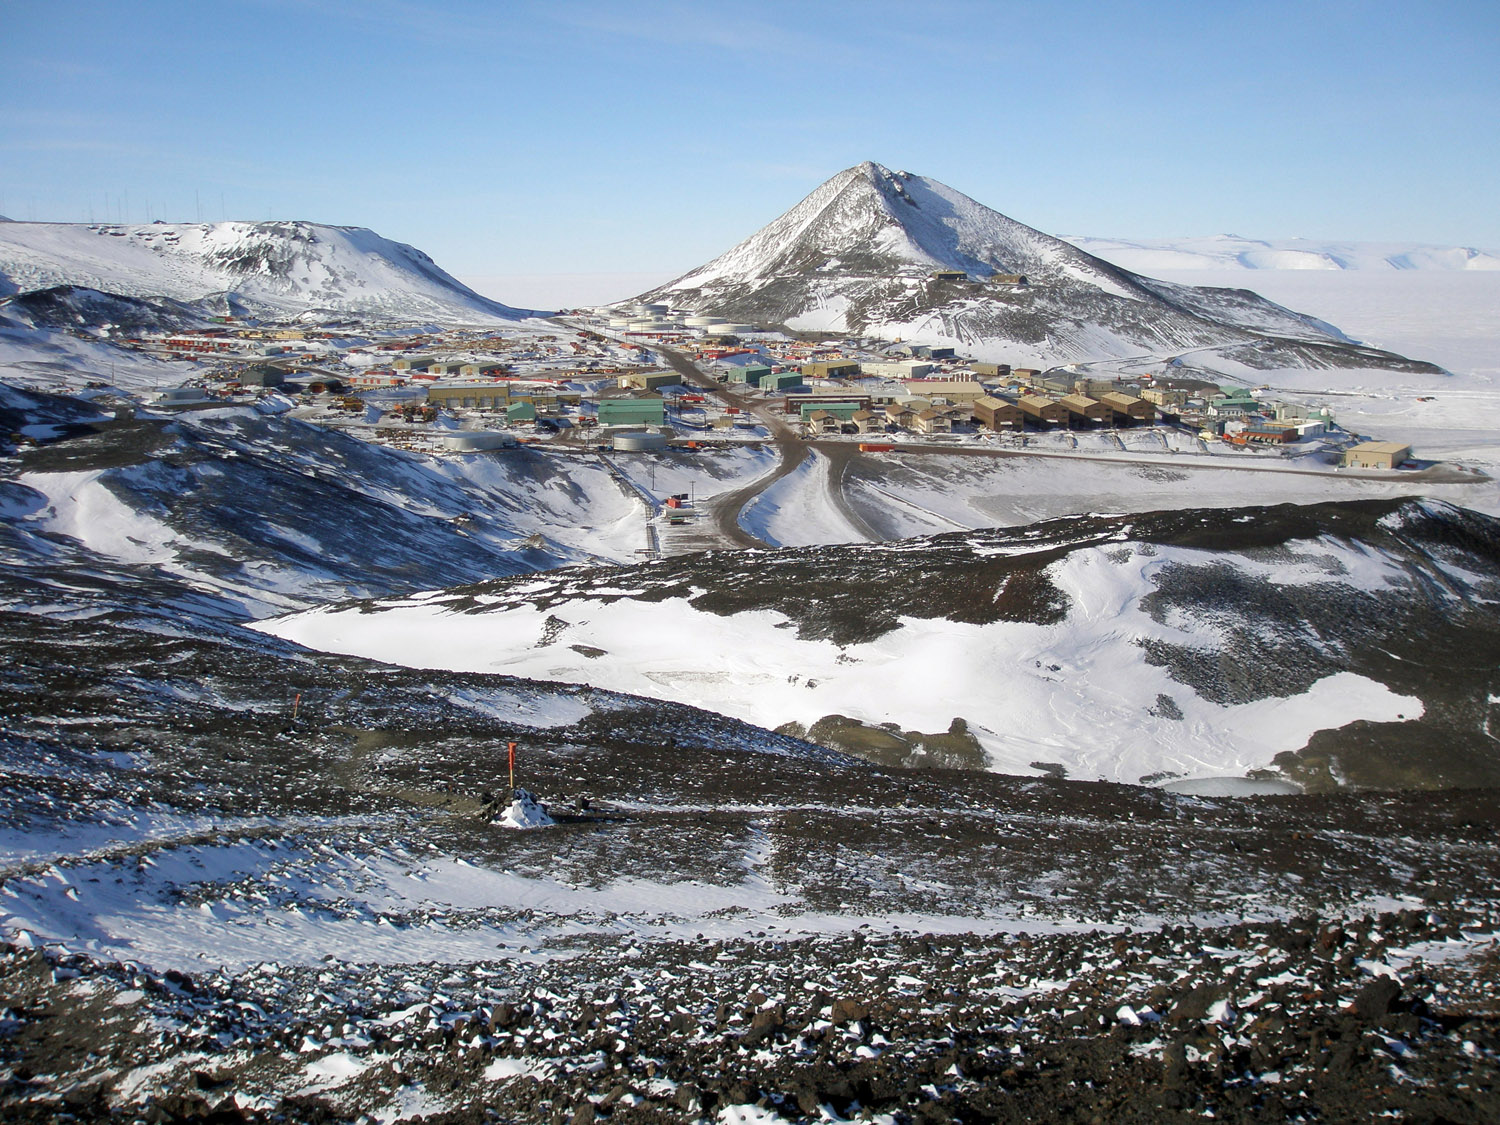 Hut Ridge Trail & McMurdo Station